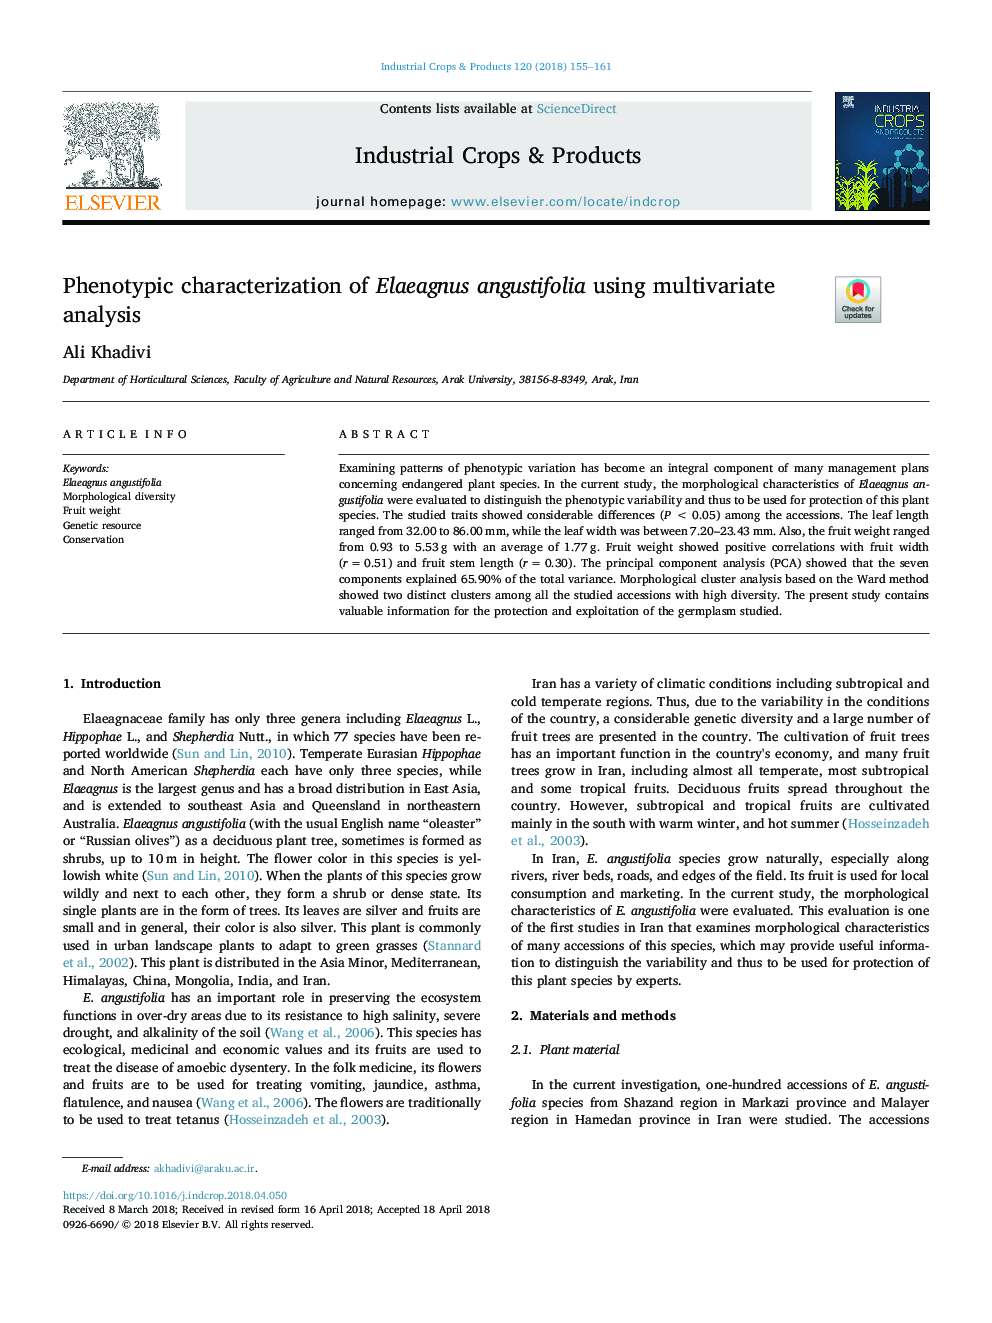 Phenotypic characterization of Elaeagnus angustifolia using multivariate analysis